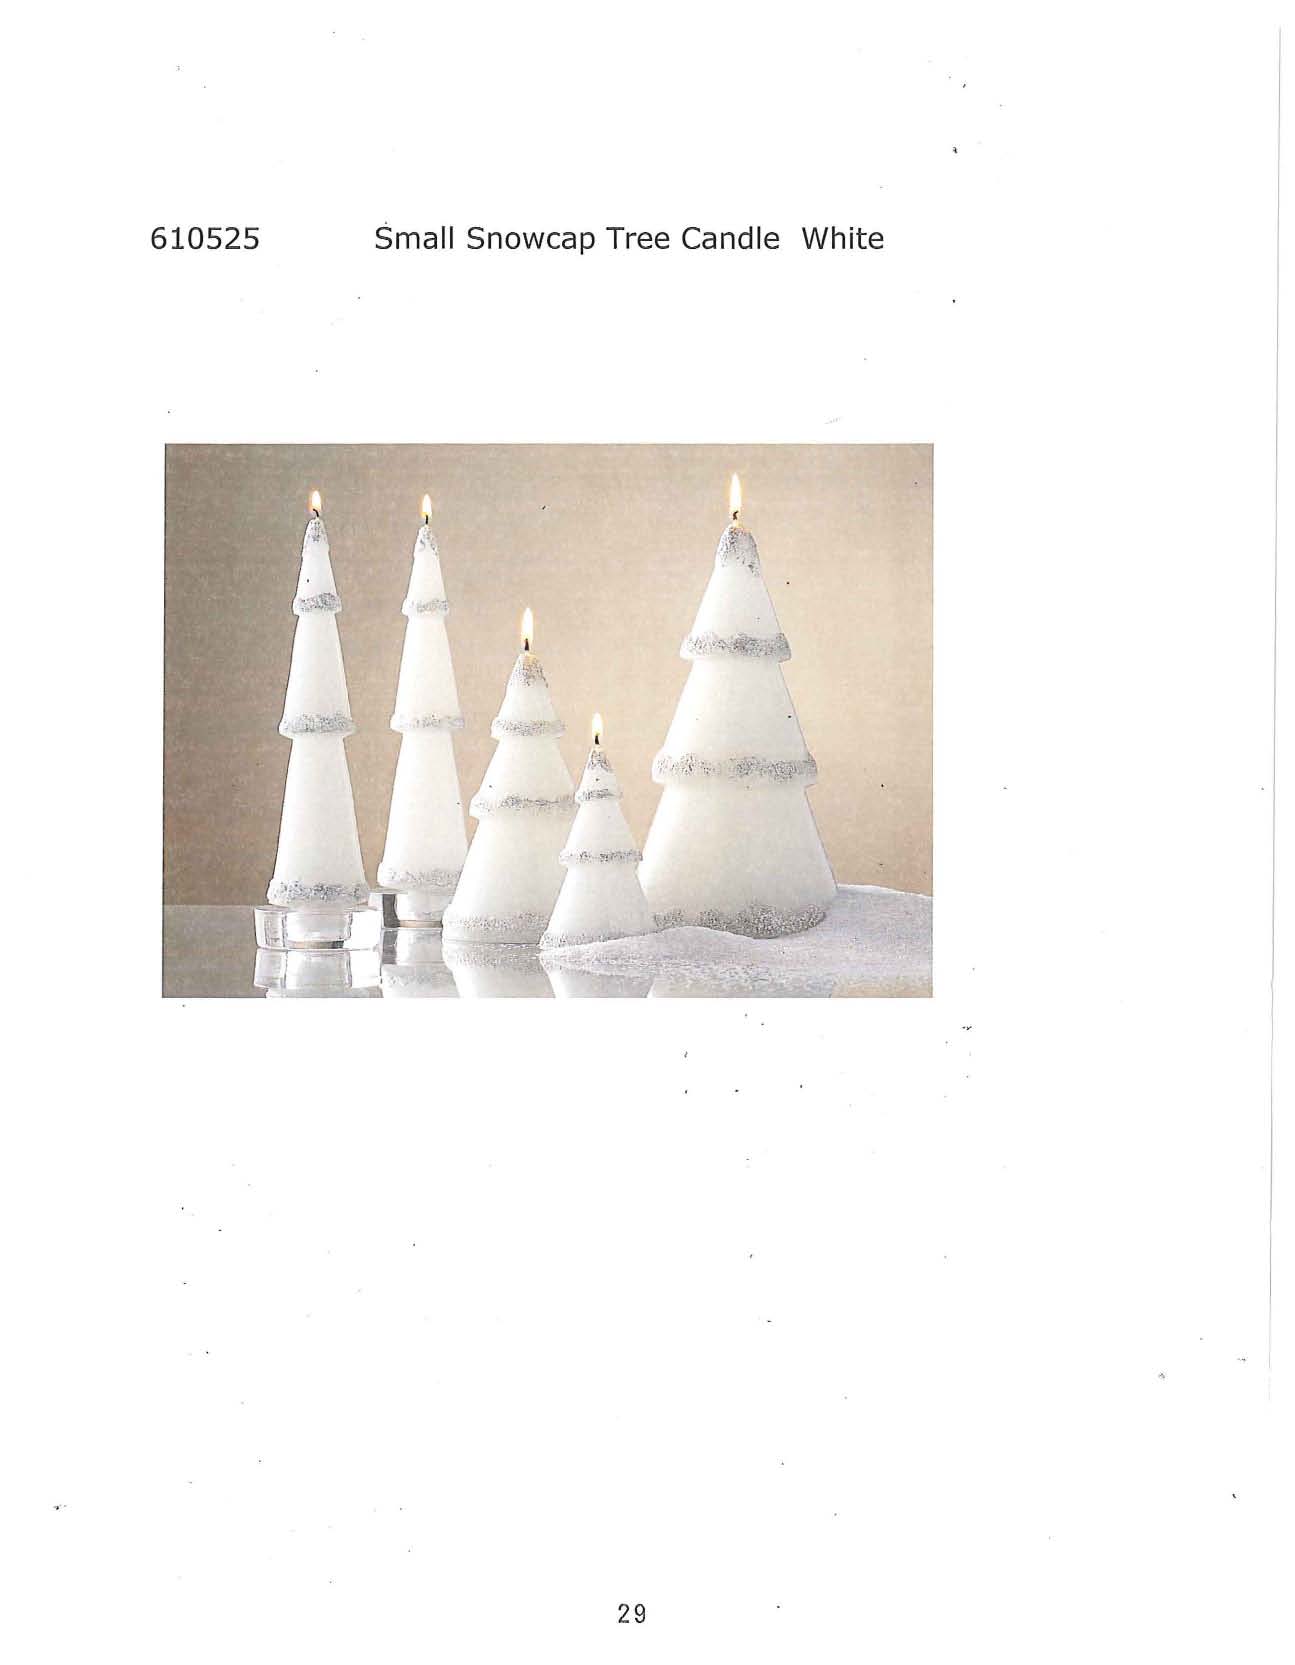 Small Snowcap Tree Candle - White